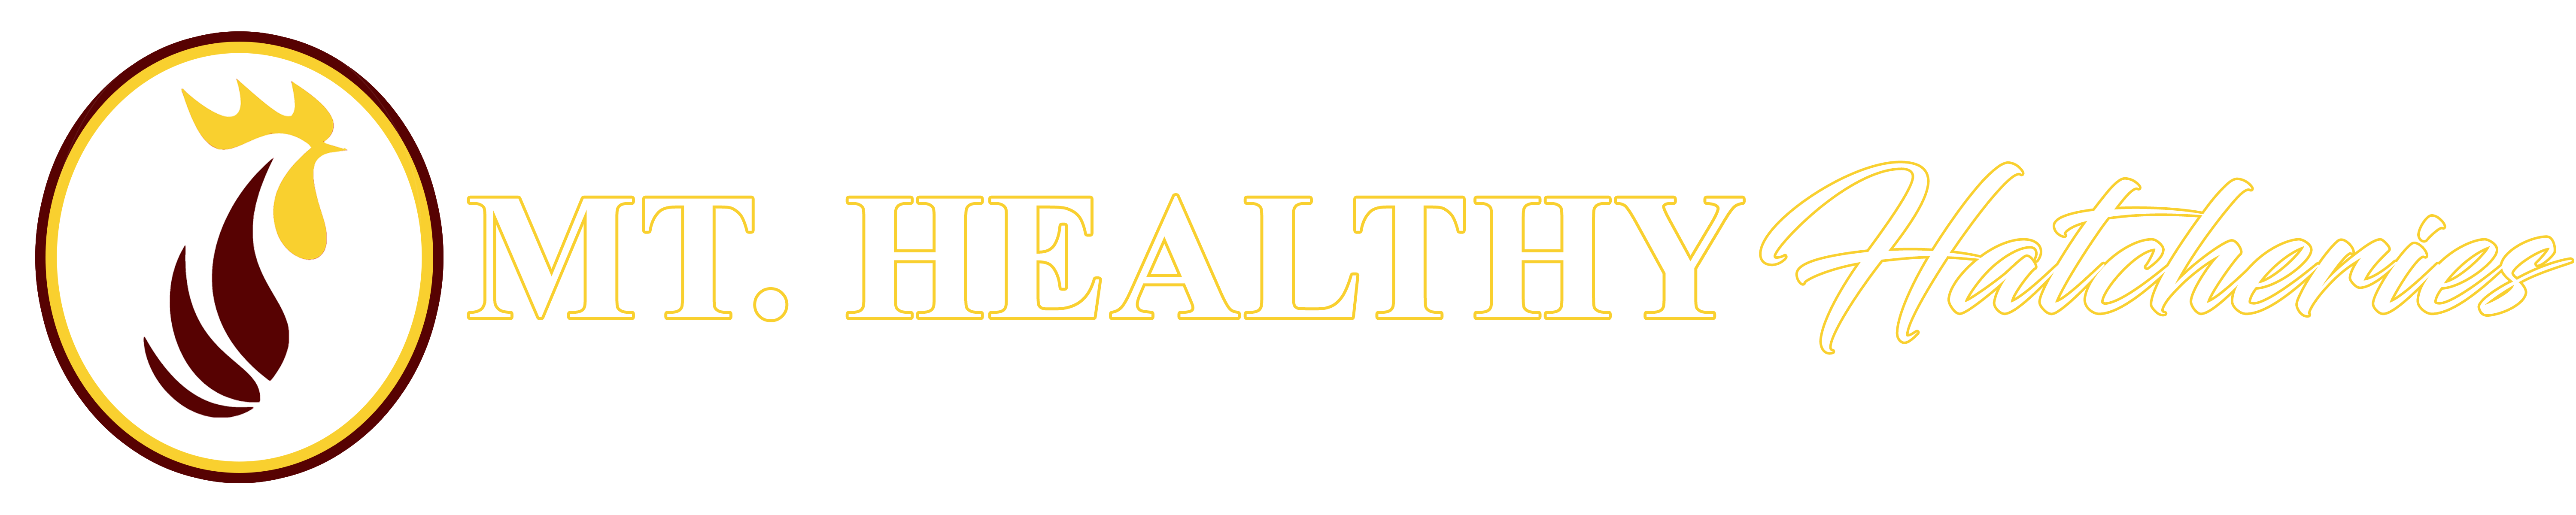 Mt. Healthy Hatcheries Logo